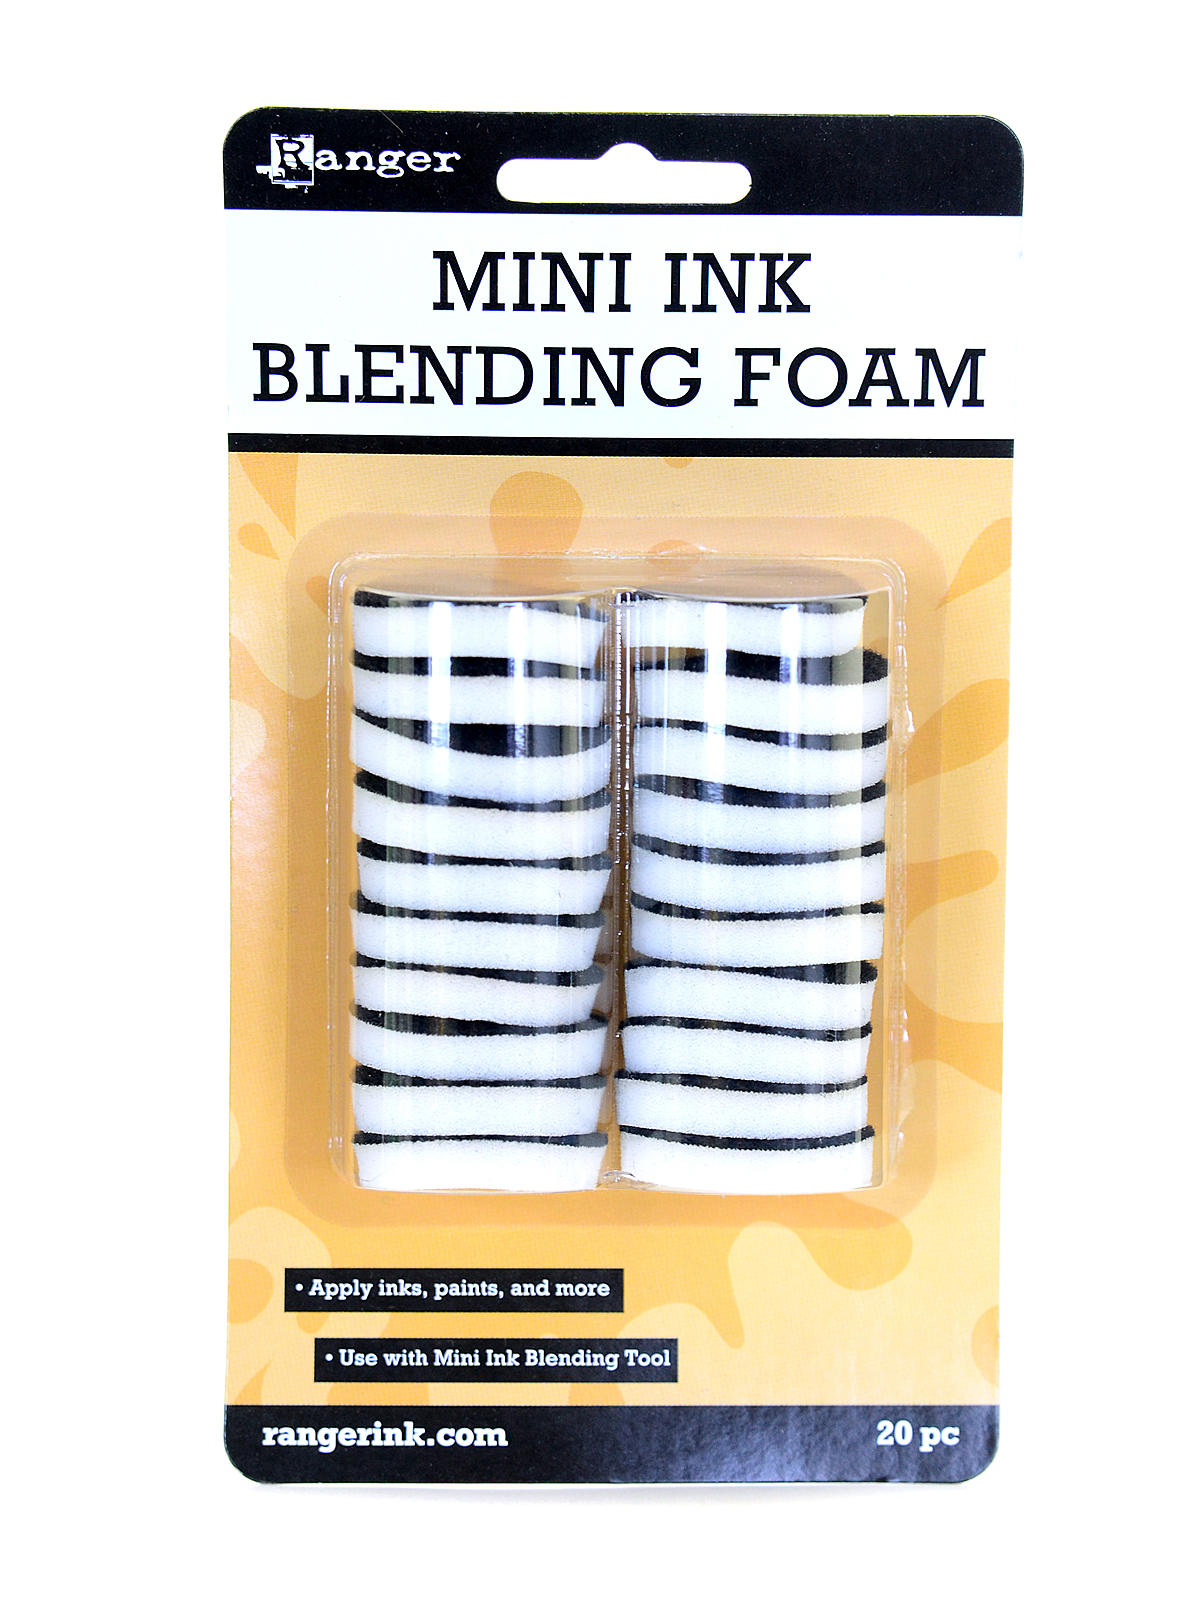 Mini Ink Blending Tool Replacement Foam Pack Of 20